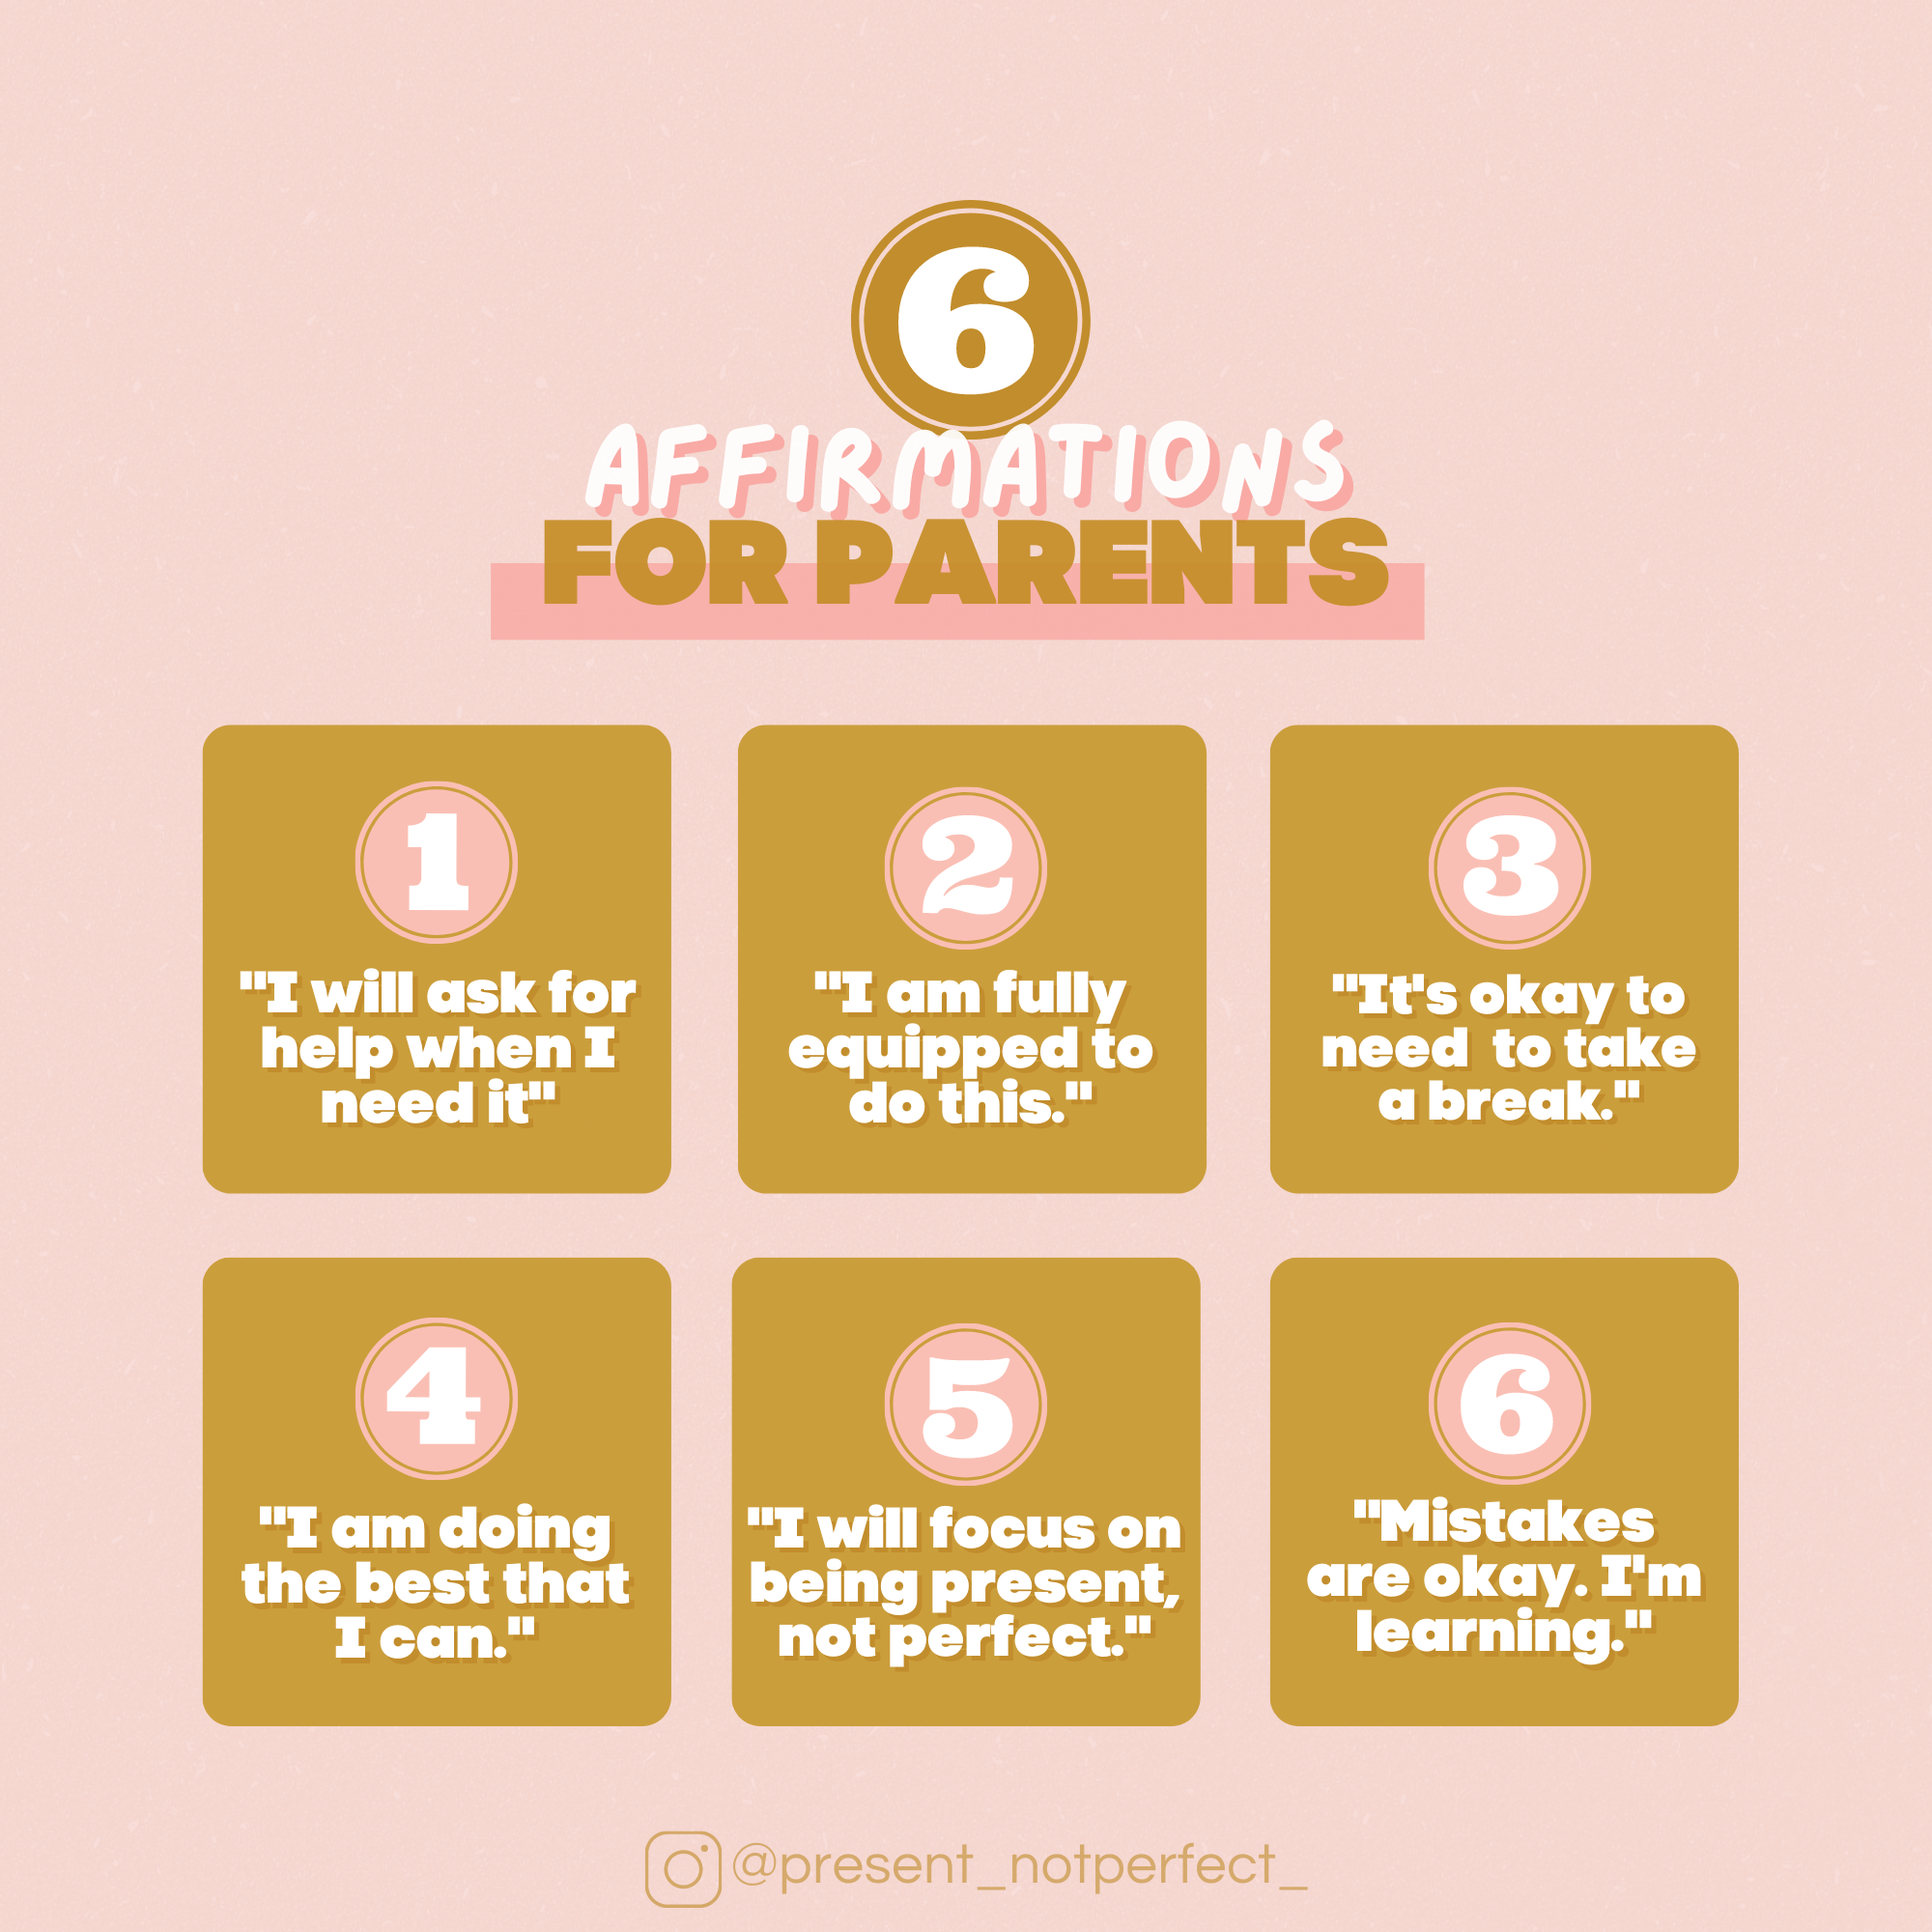 6 Affirmations for Parents